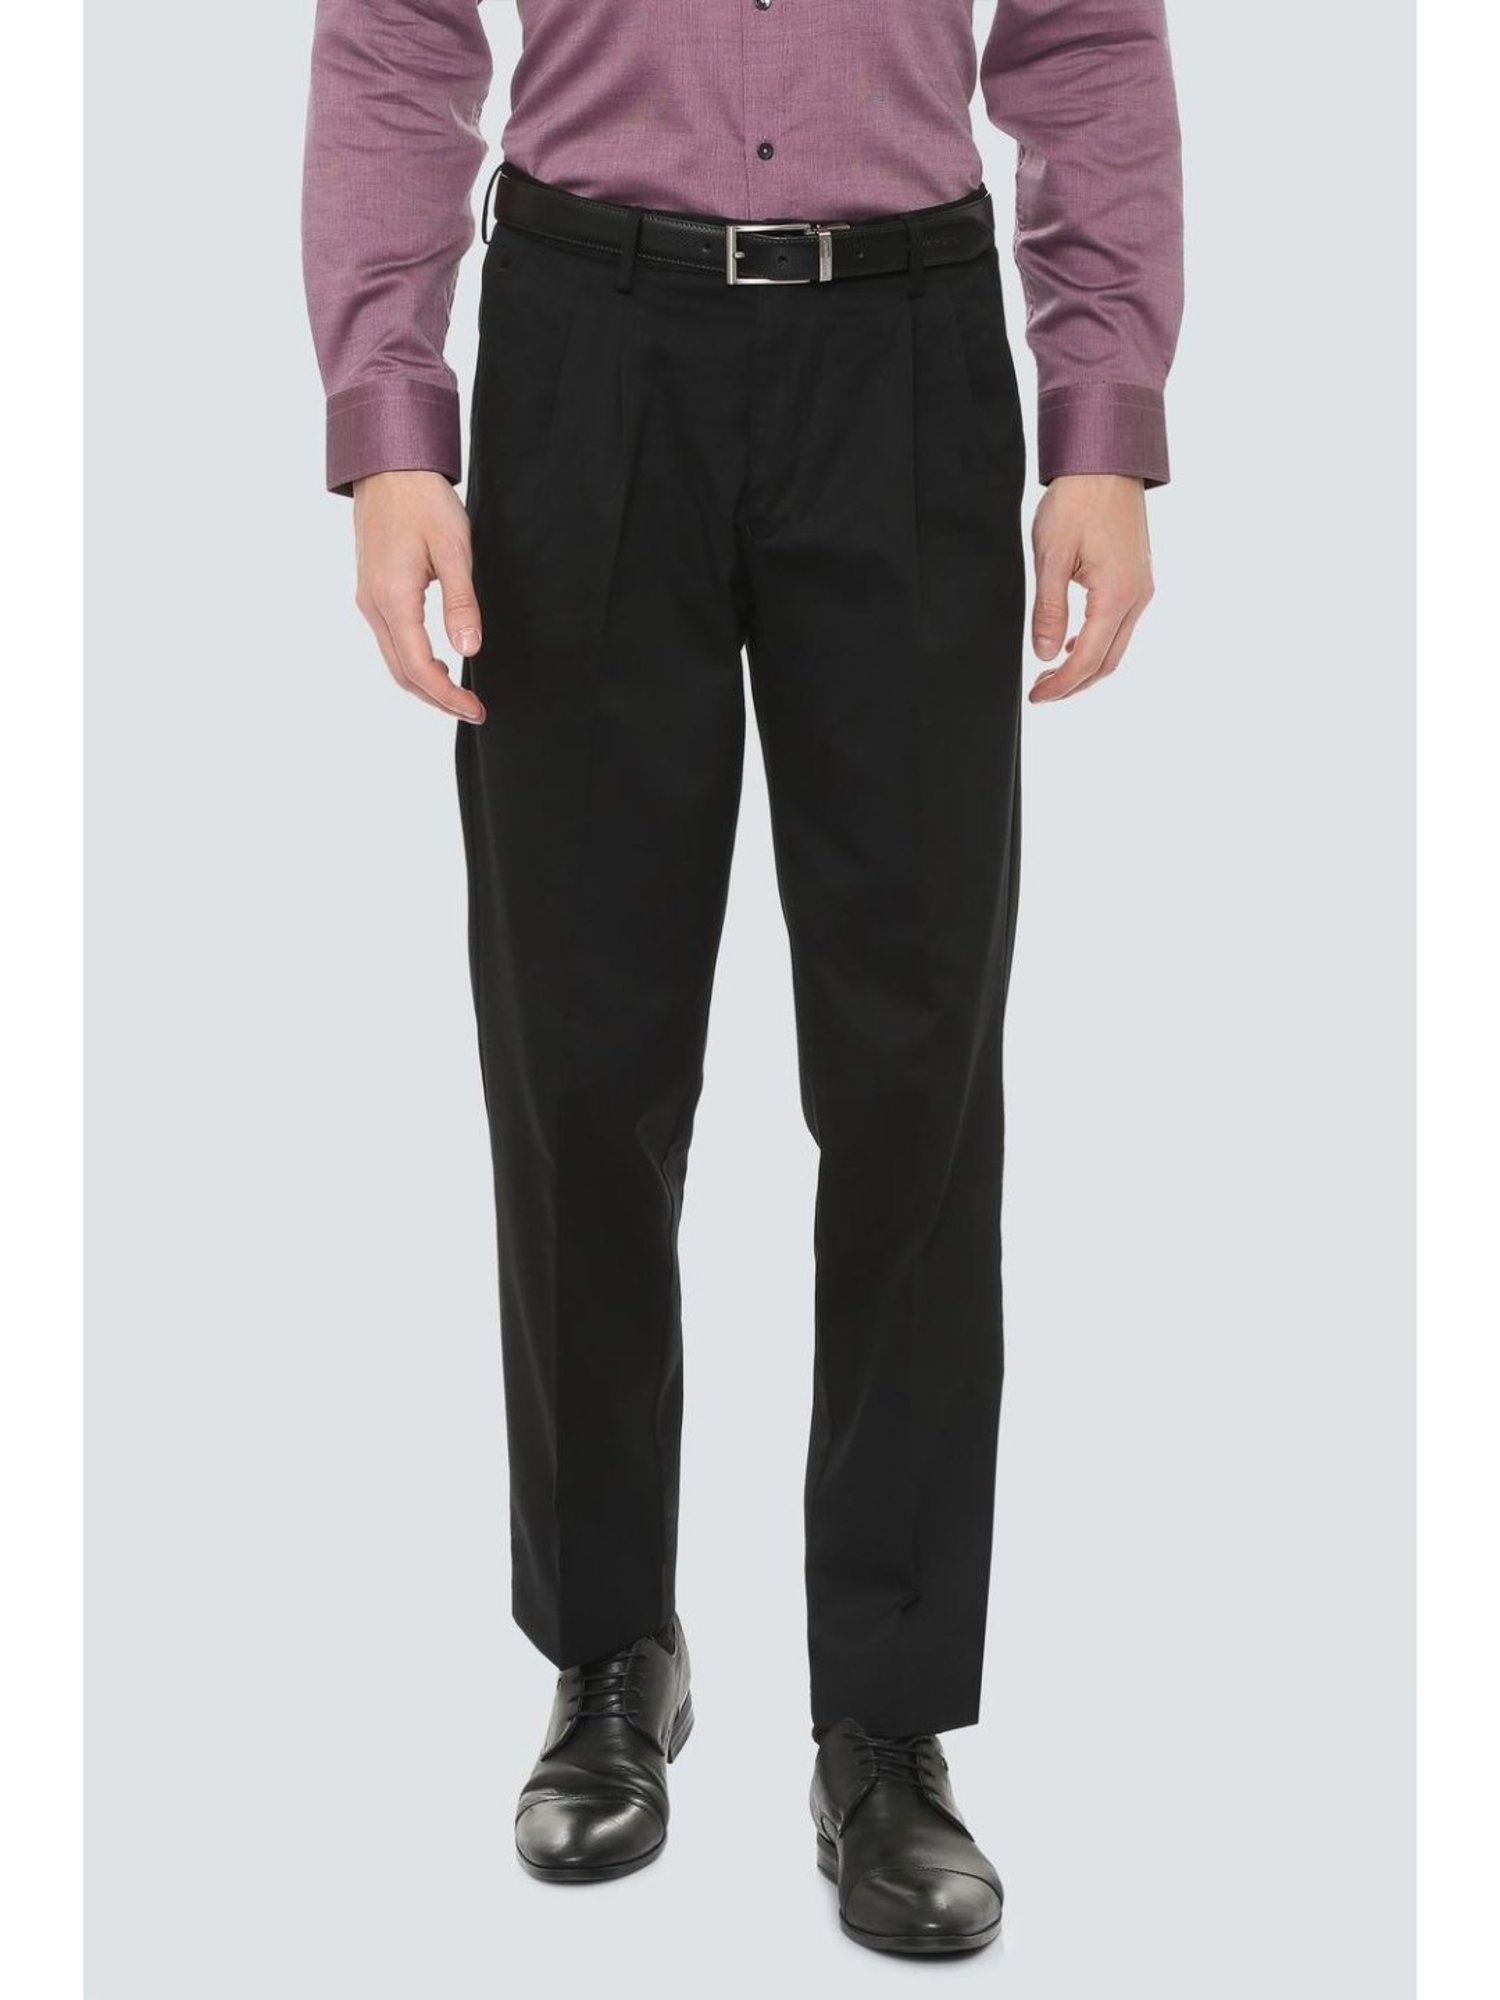 Buy Navy Trousers  Pants for Men by RICHLOOK Online  Ajiocom